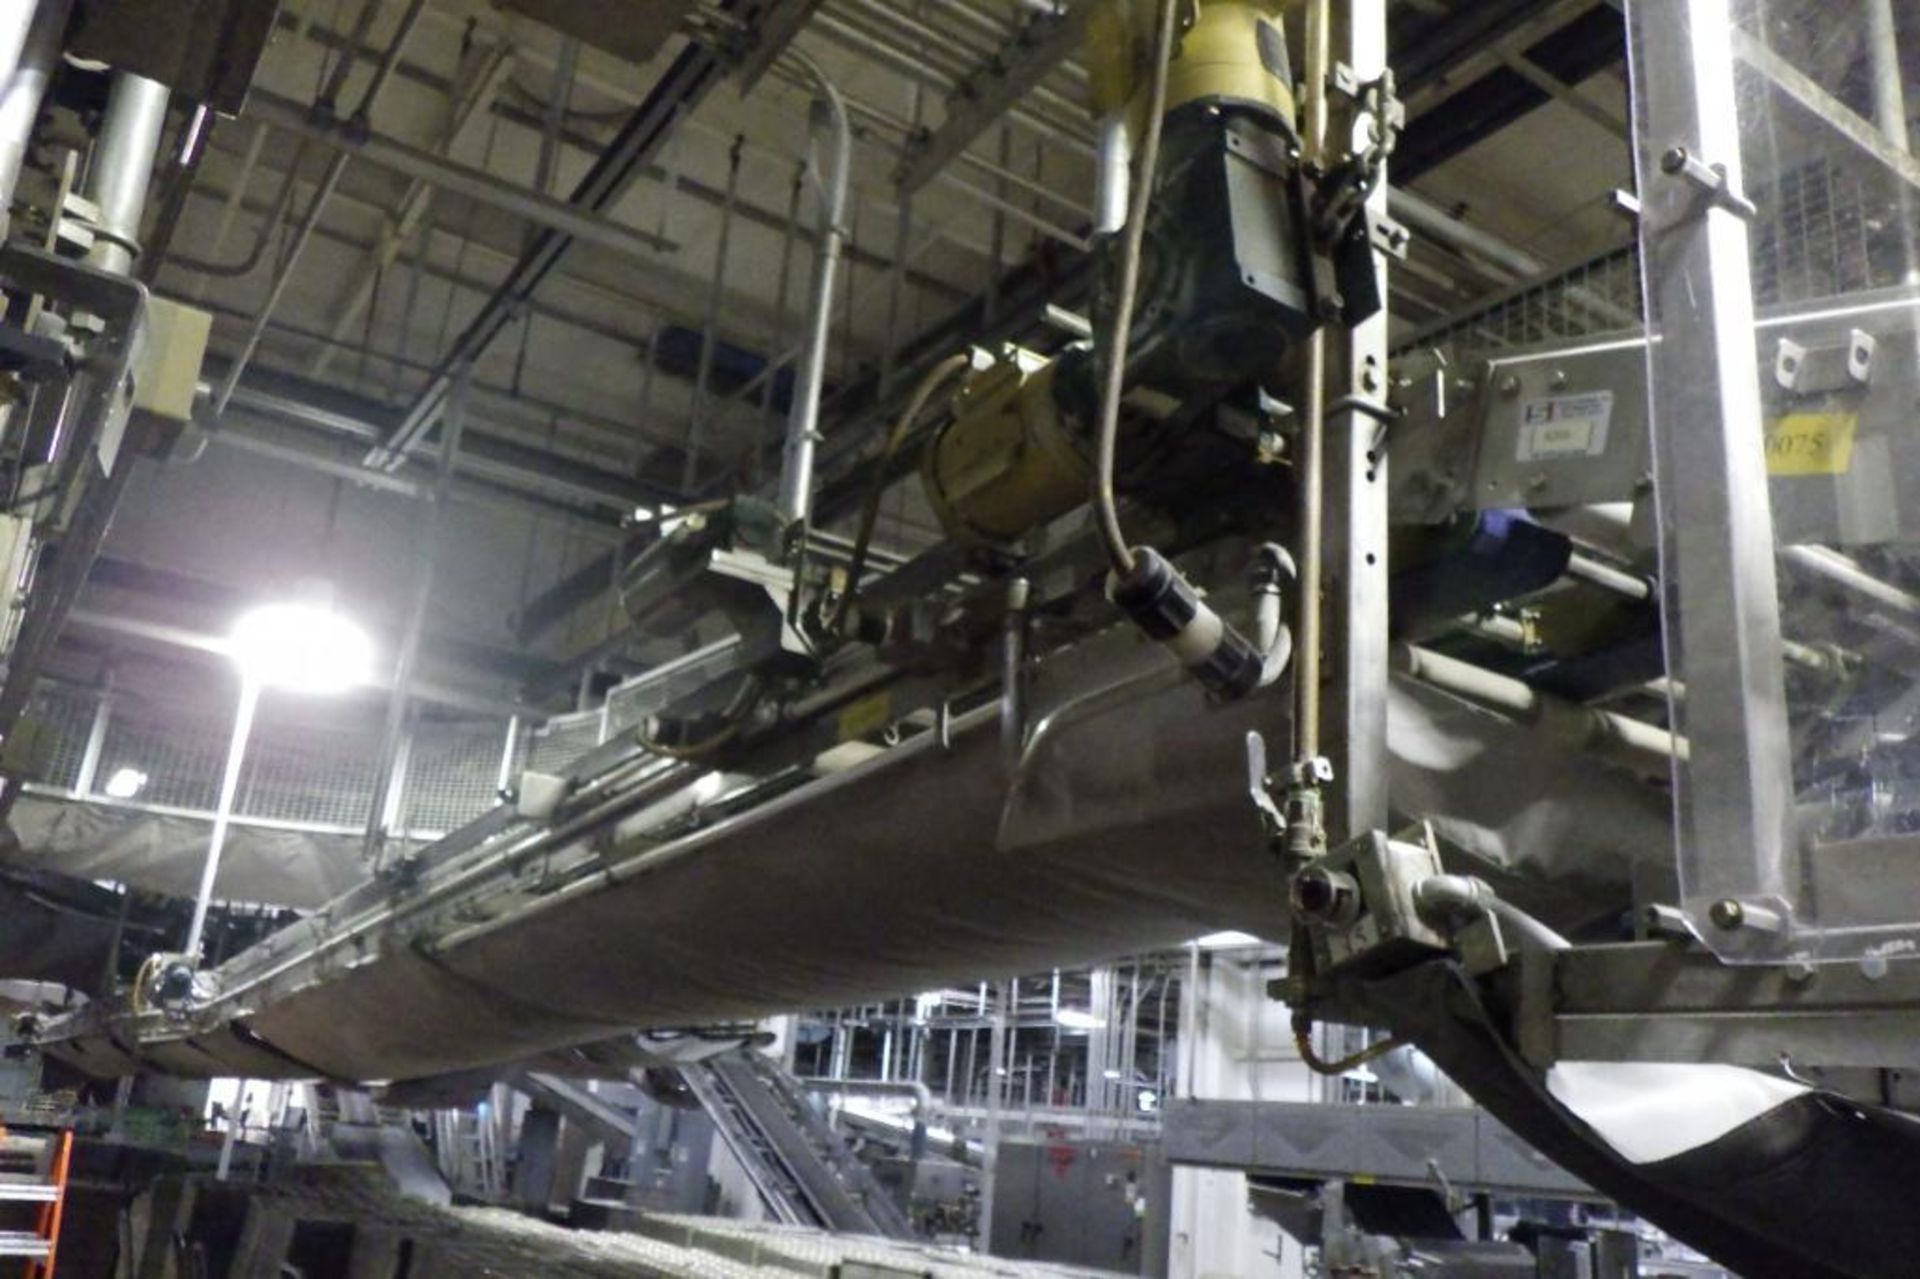 Stewart systems overhead conveyor - Image 6 of 29